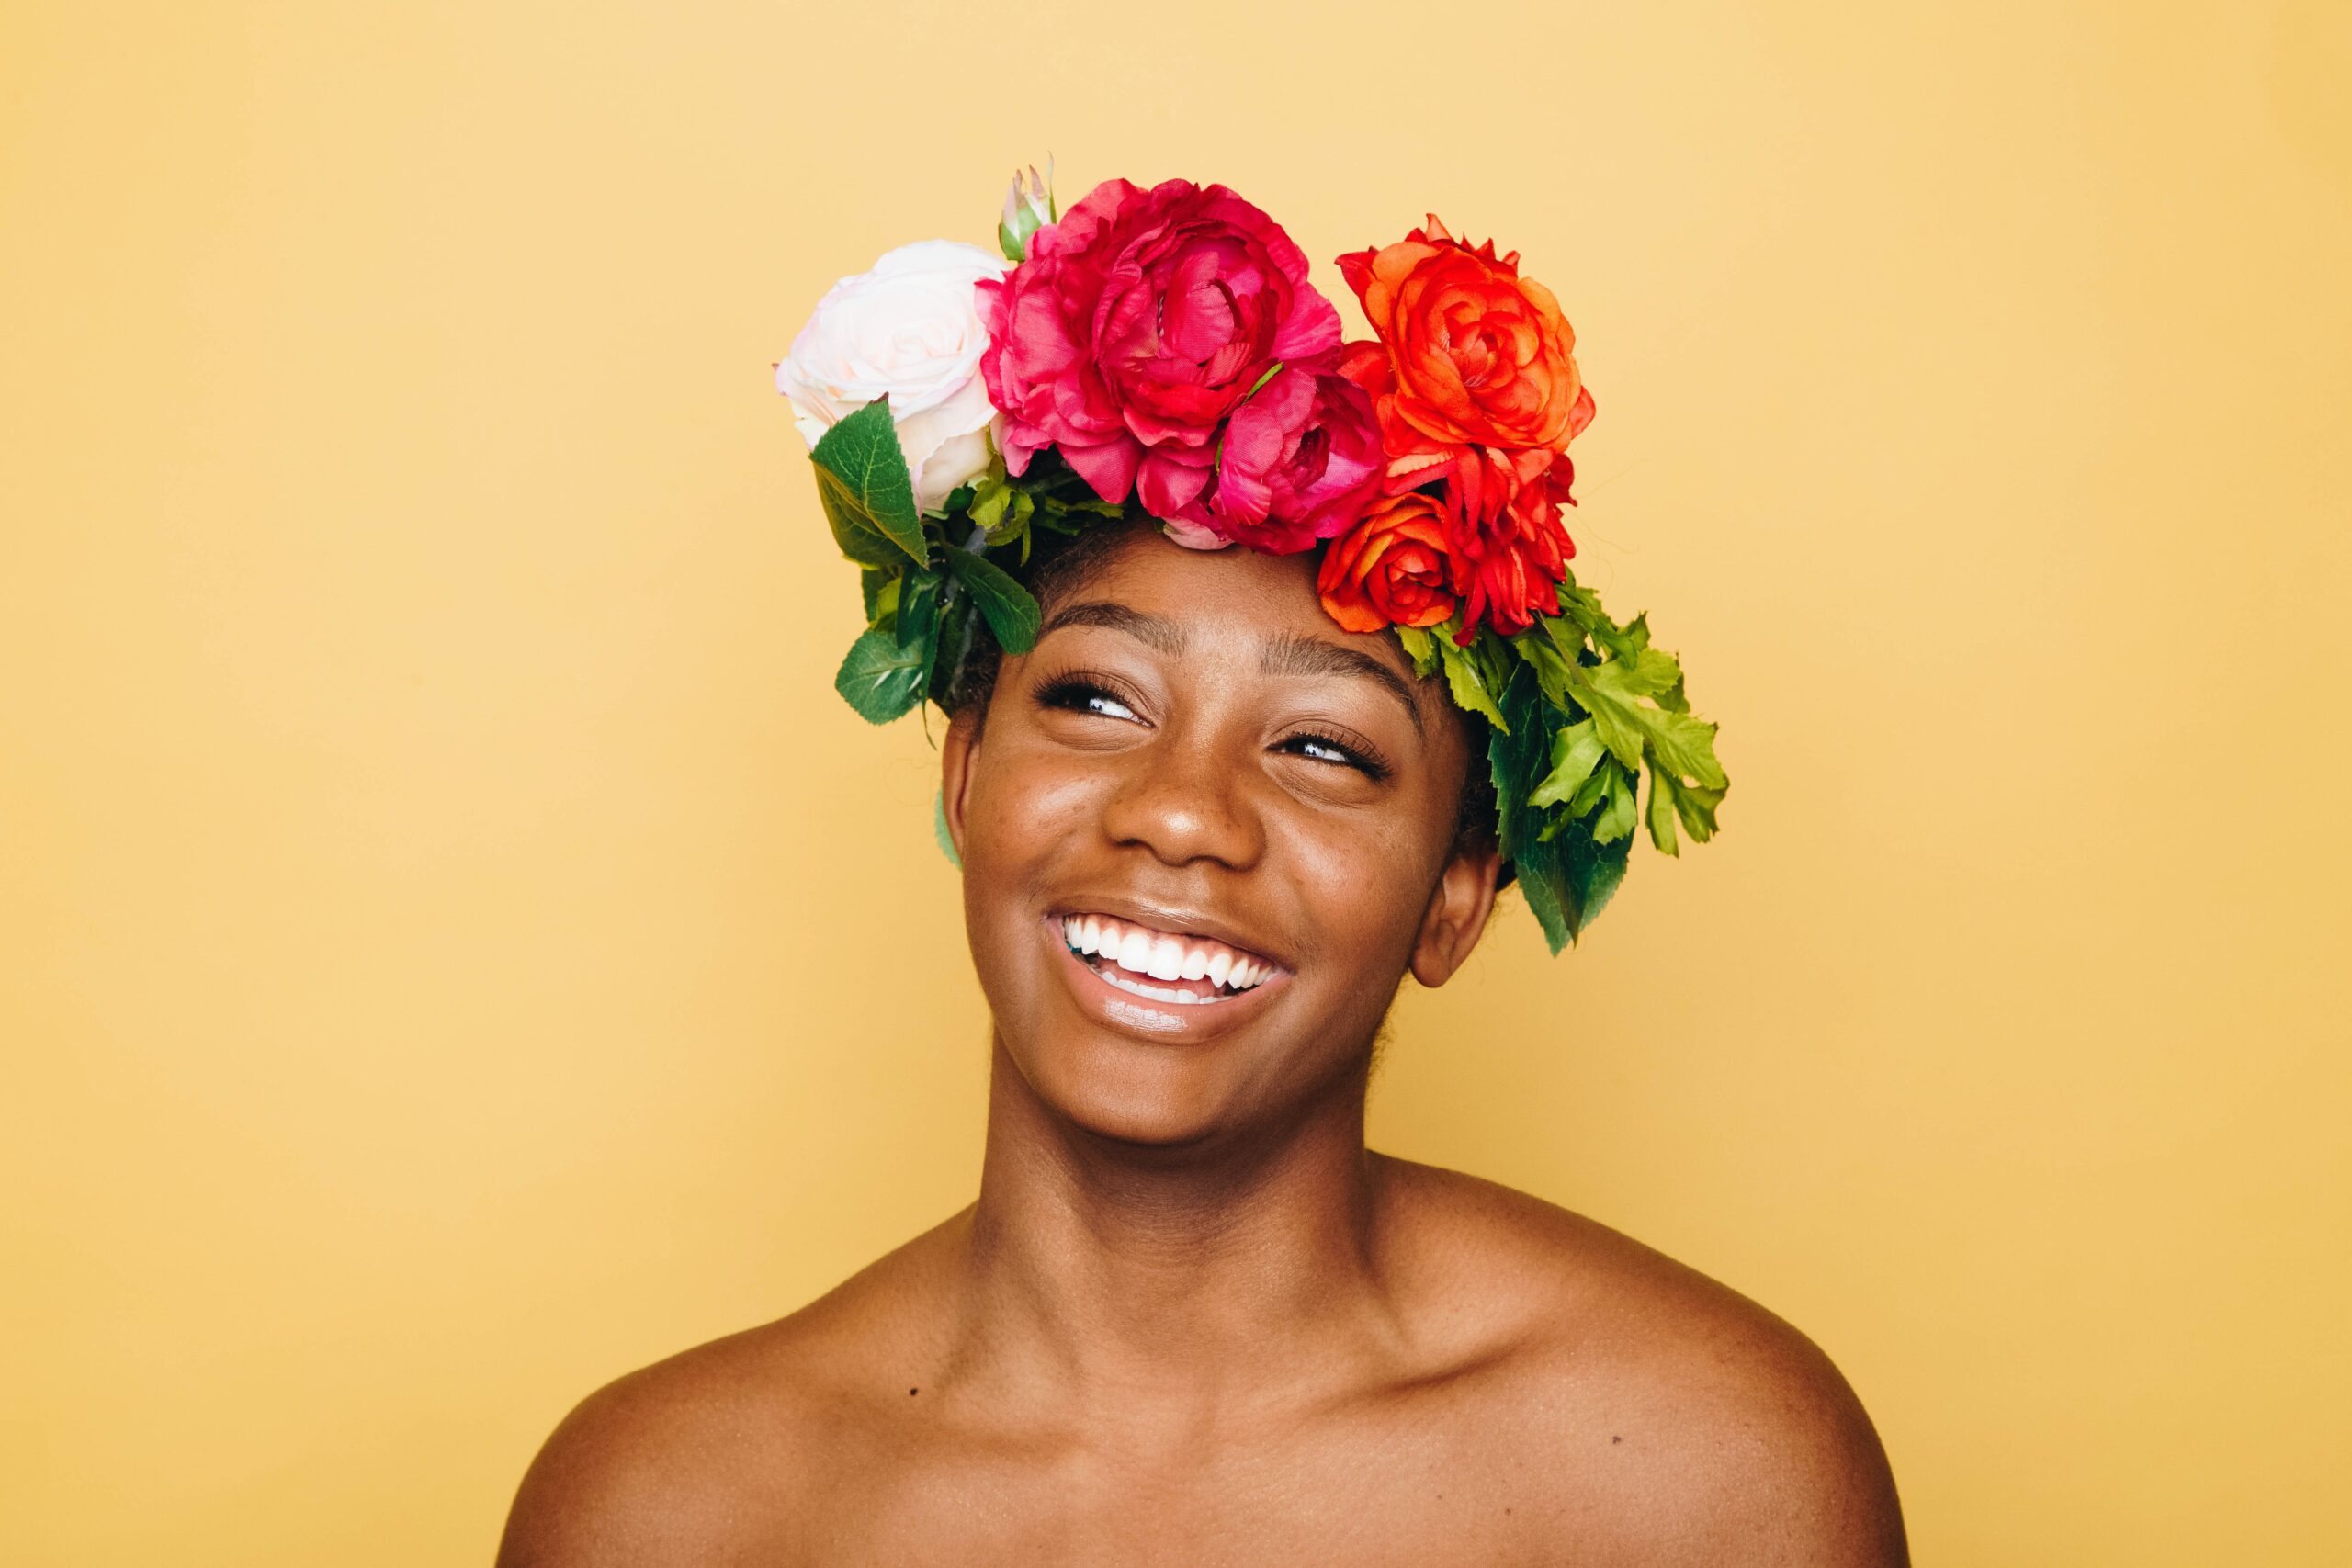 Woman smiling wearing flowers